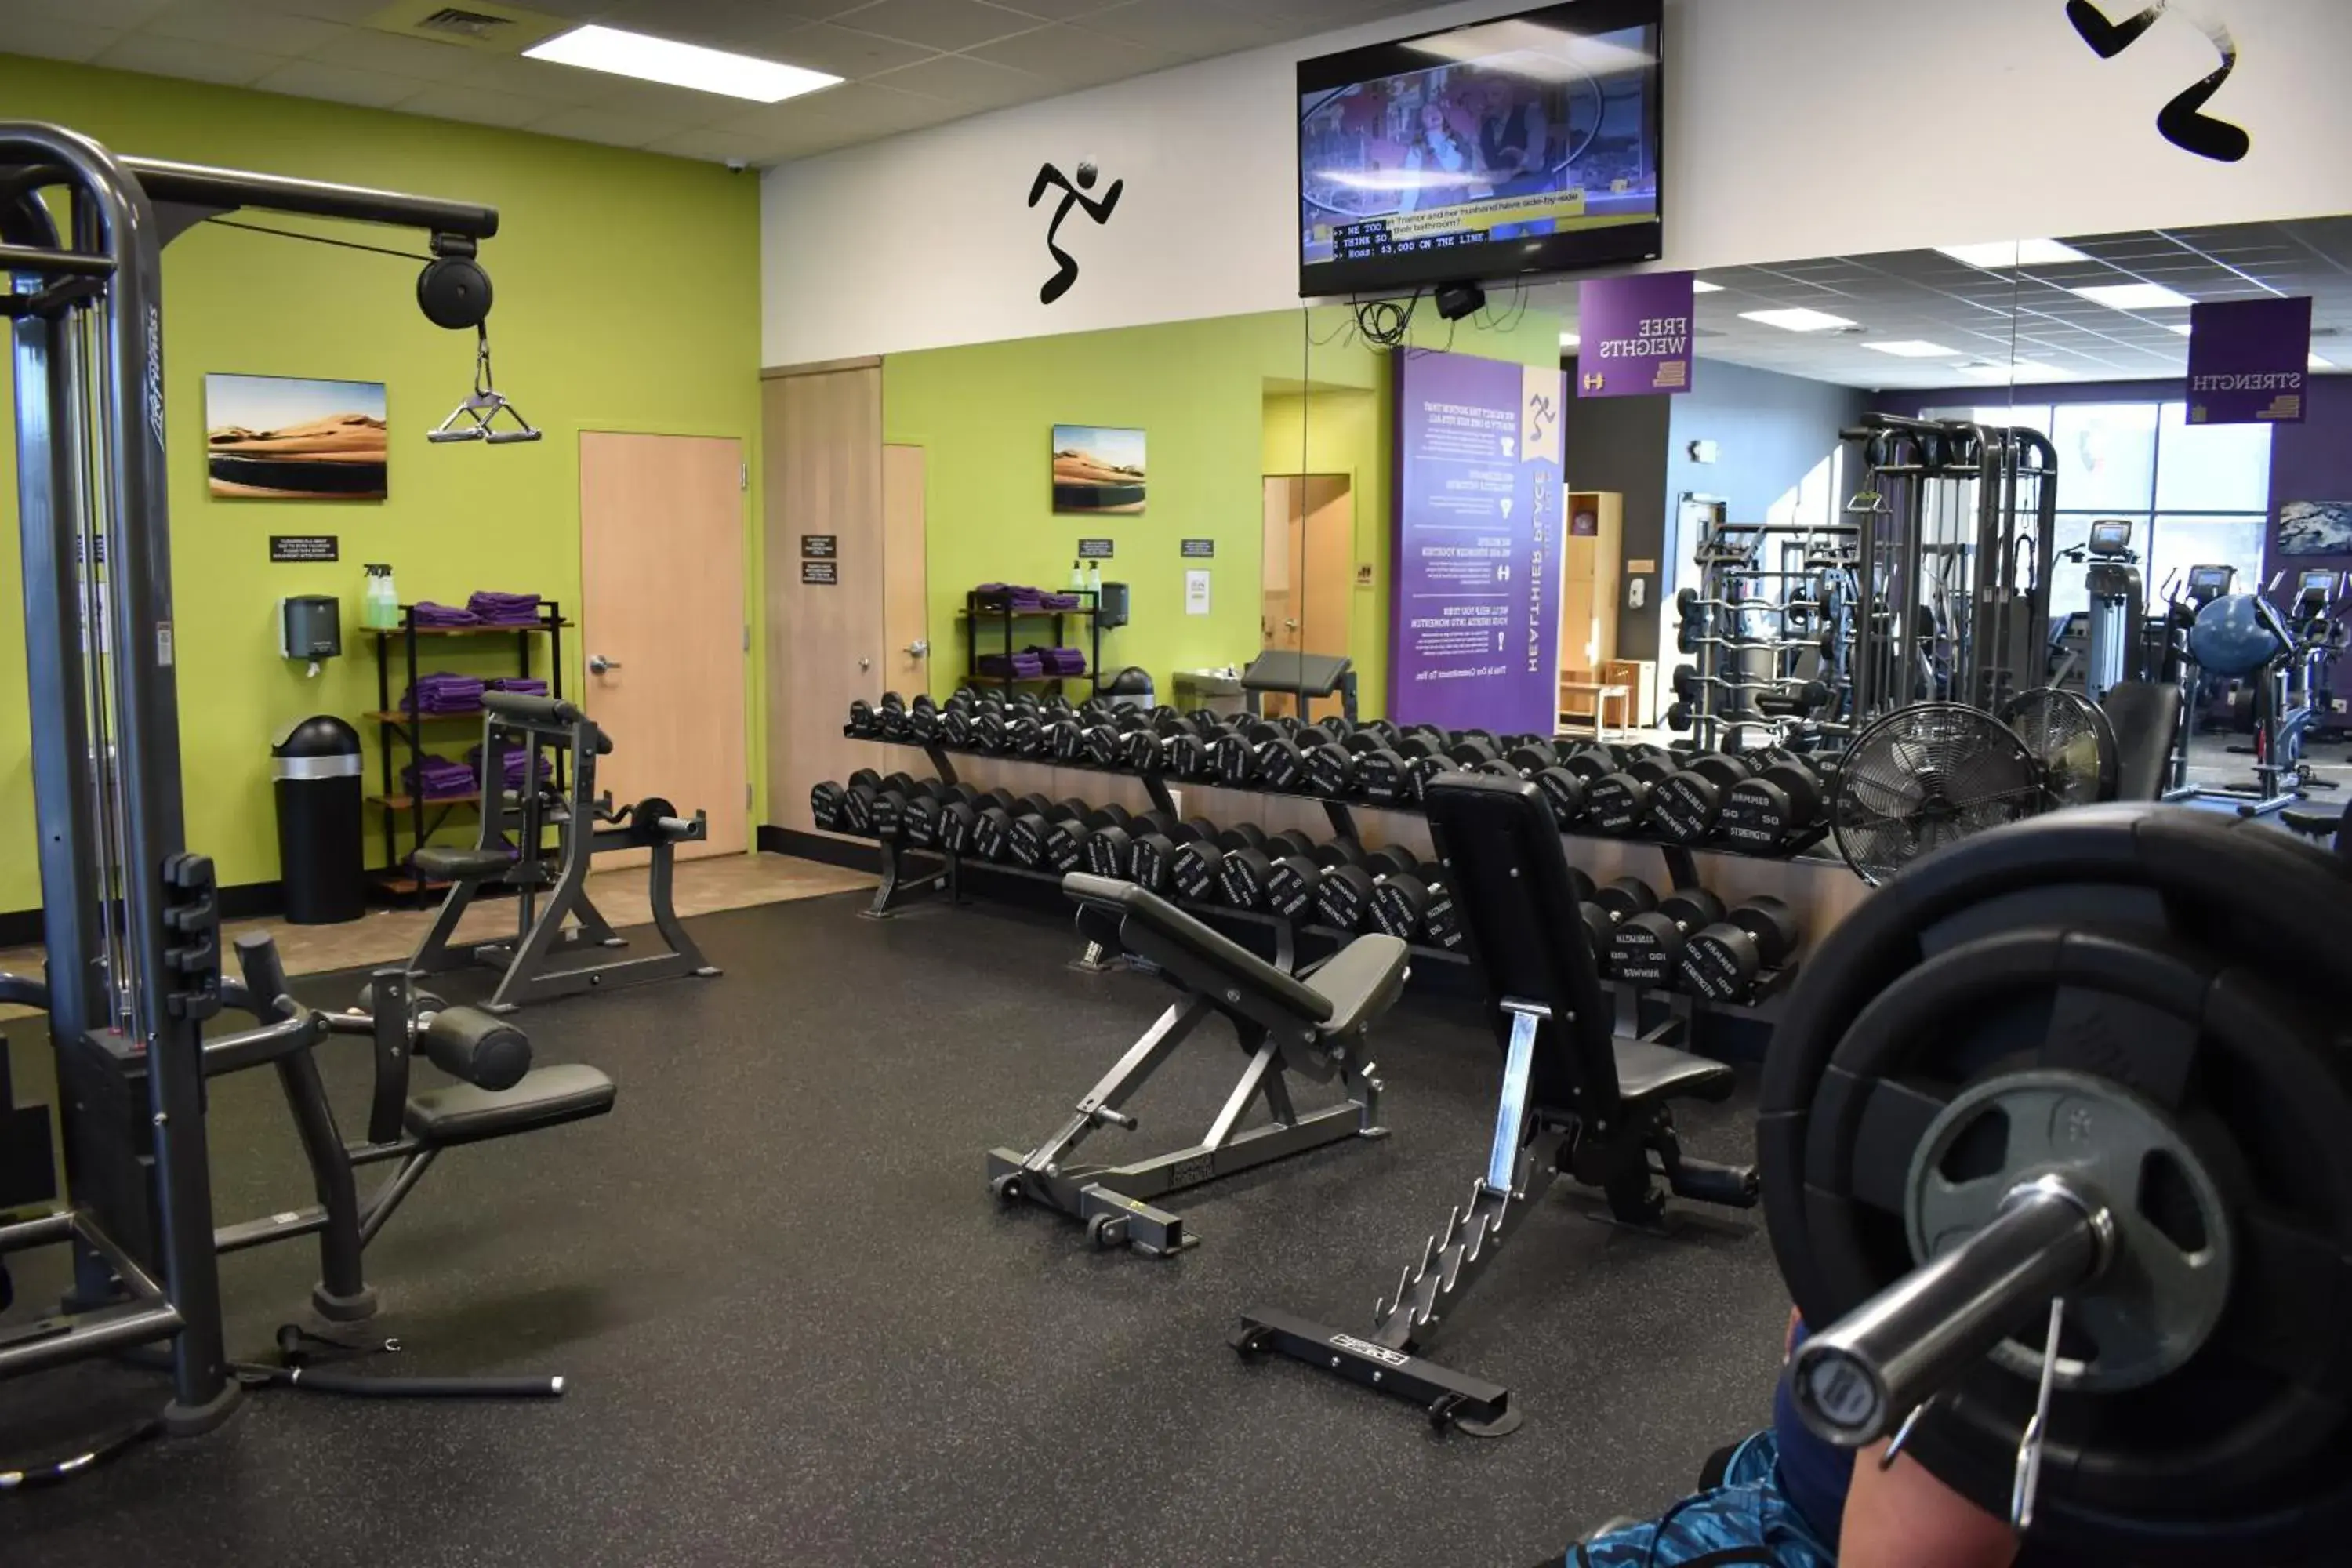 Fitness centre/facilities, Fitness Center/Facilities in Silver Horseshoe Inn